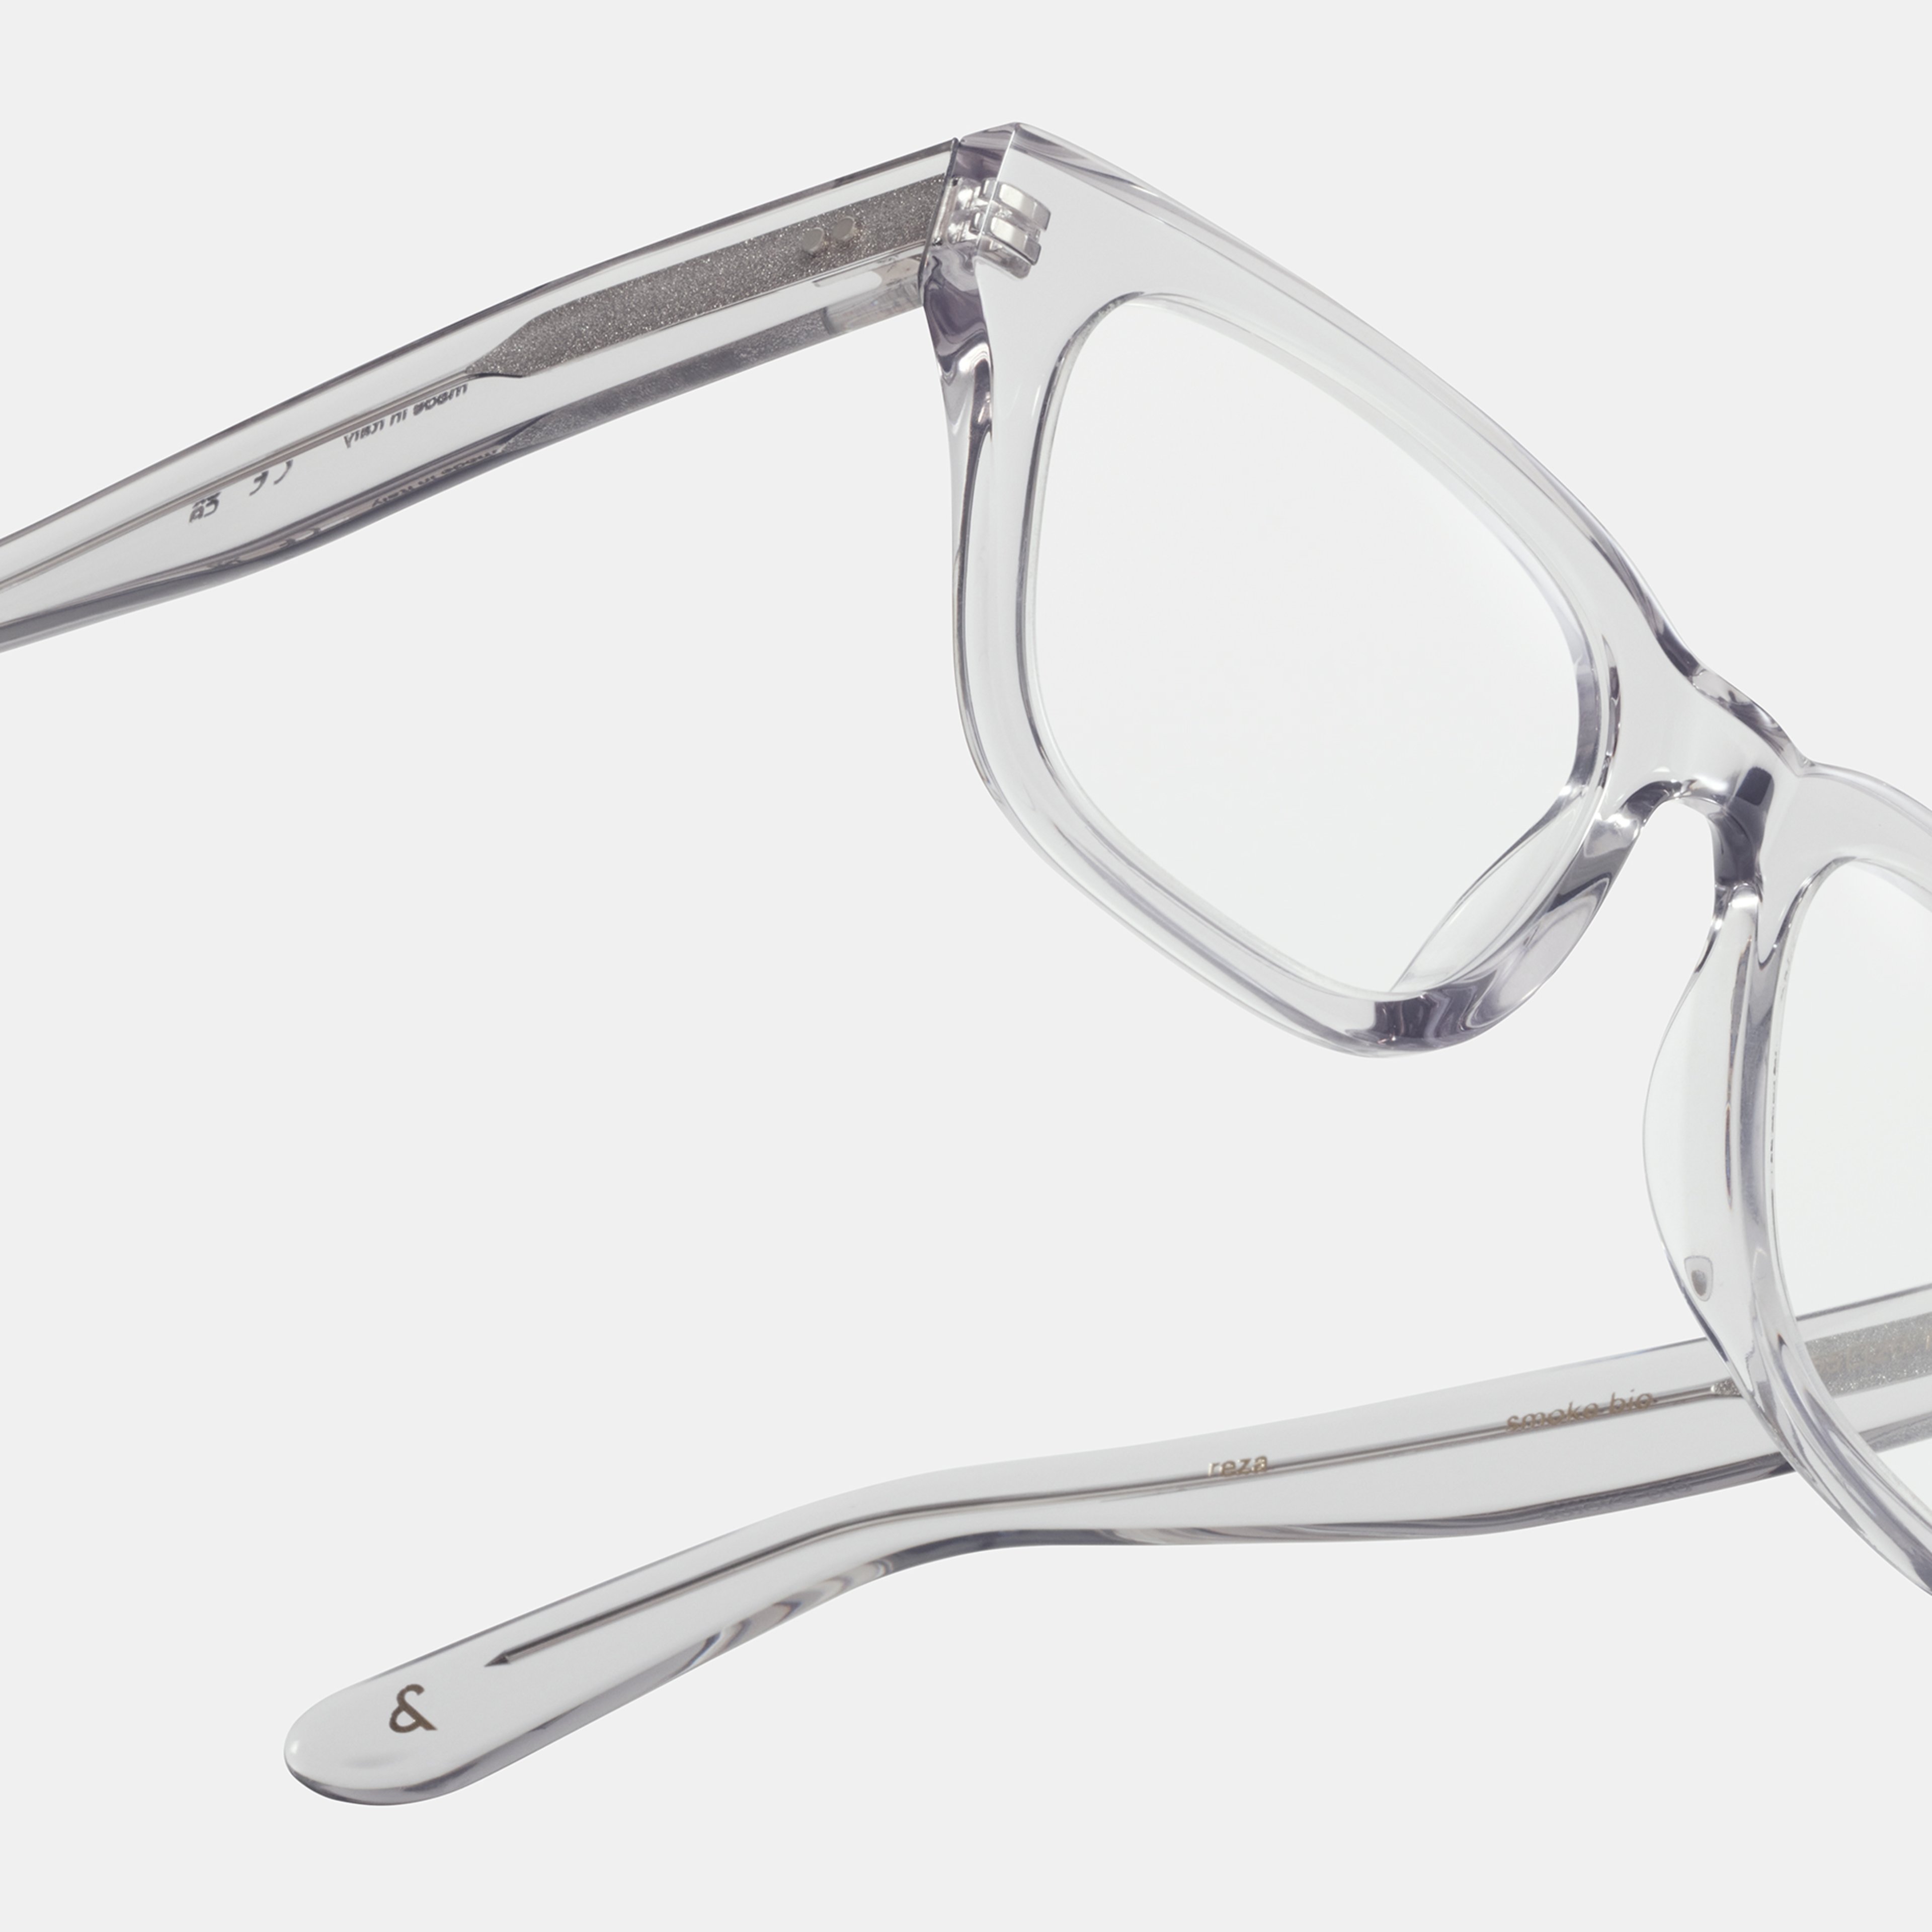 Ace & Tate Glasses | rectangle Bio acetate in Grey